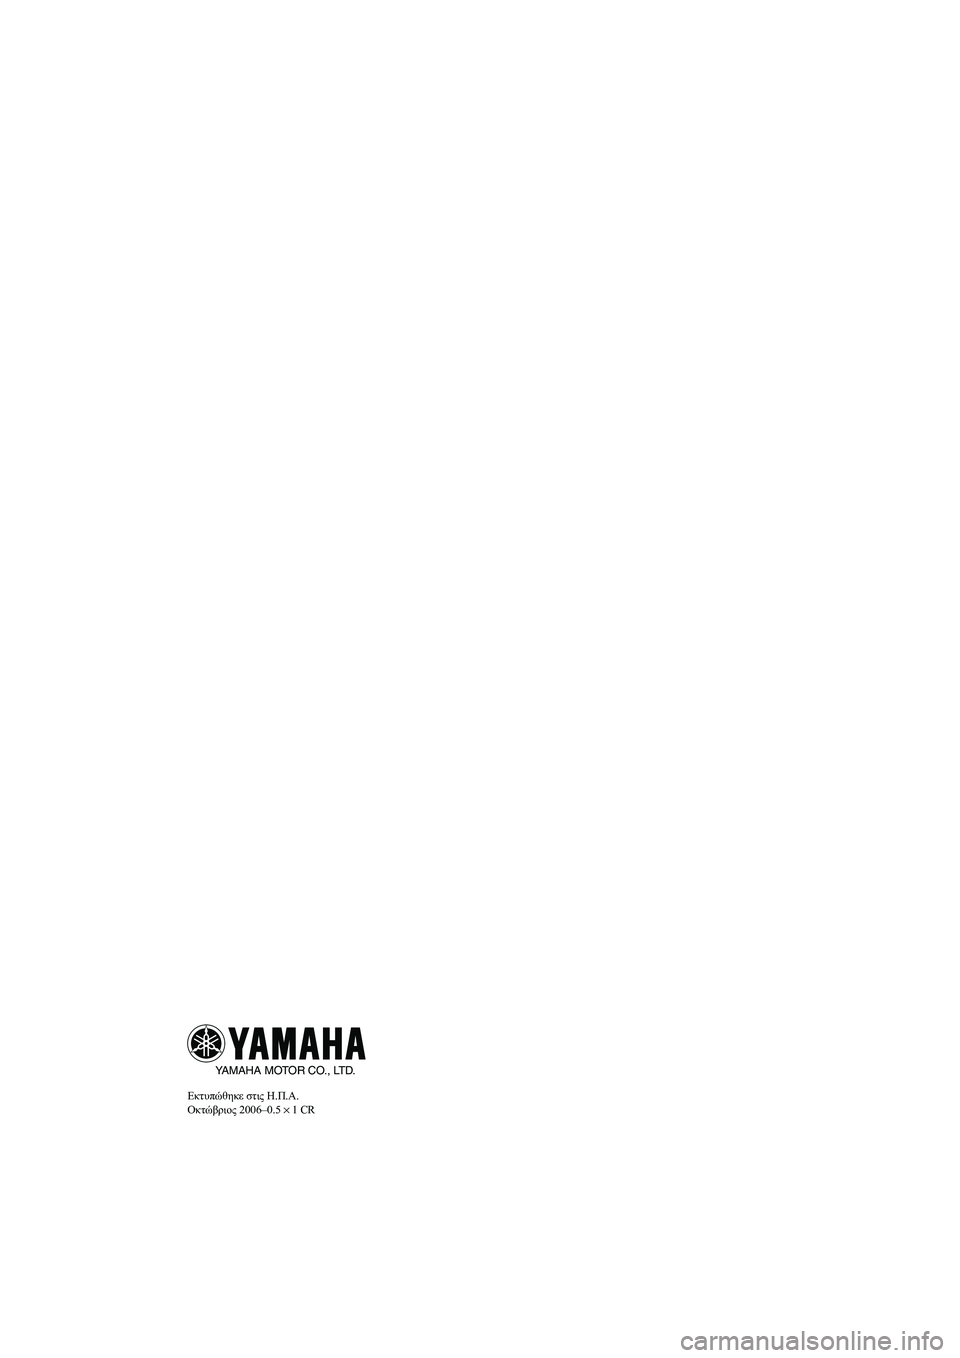 YAMAHA FX HO 2007  ΟΔΗΓΌΣ ΧΡΉΣΗΣ (in Greek) YAMAHA MOTOR CO., LTD.
Εκτυπώθηκε στις Η.Π.Α.
Οκτώβριος 2006–0.5 × 1 CR
UF1X71R0.book  Page 1  Wednesday, September 27, 2006  1:15 PM 